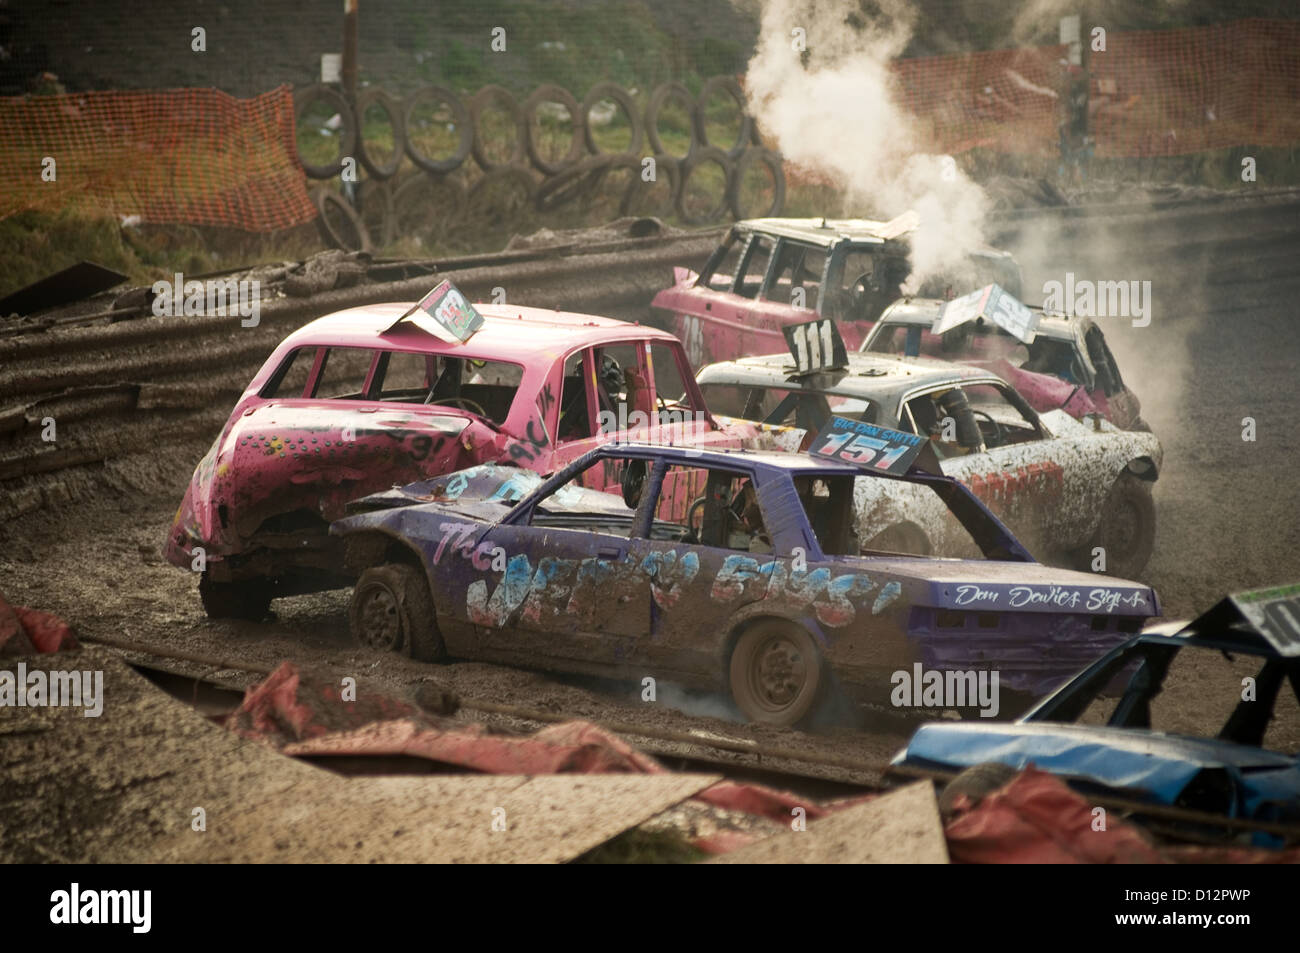 banger racing crash crashing car cars stock race races demolition derby derbies destruction smashed up being smash smashing up t Stock Photo